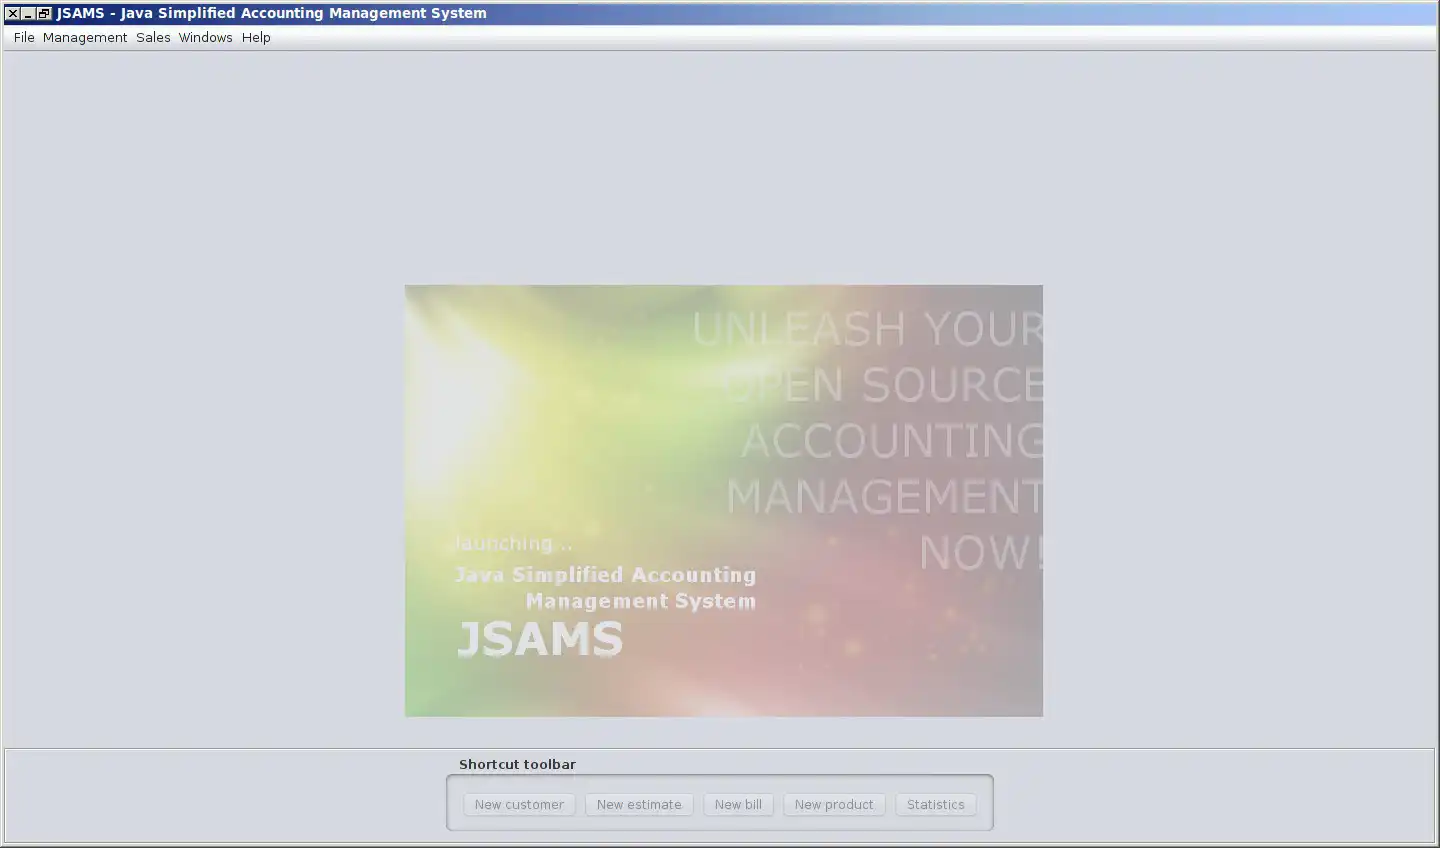 Scarica lo strumento web o l'app web jsams